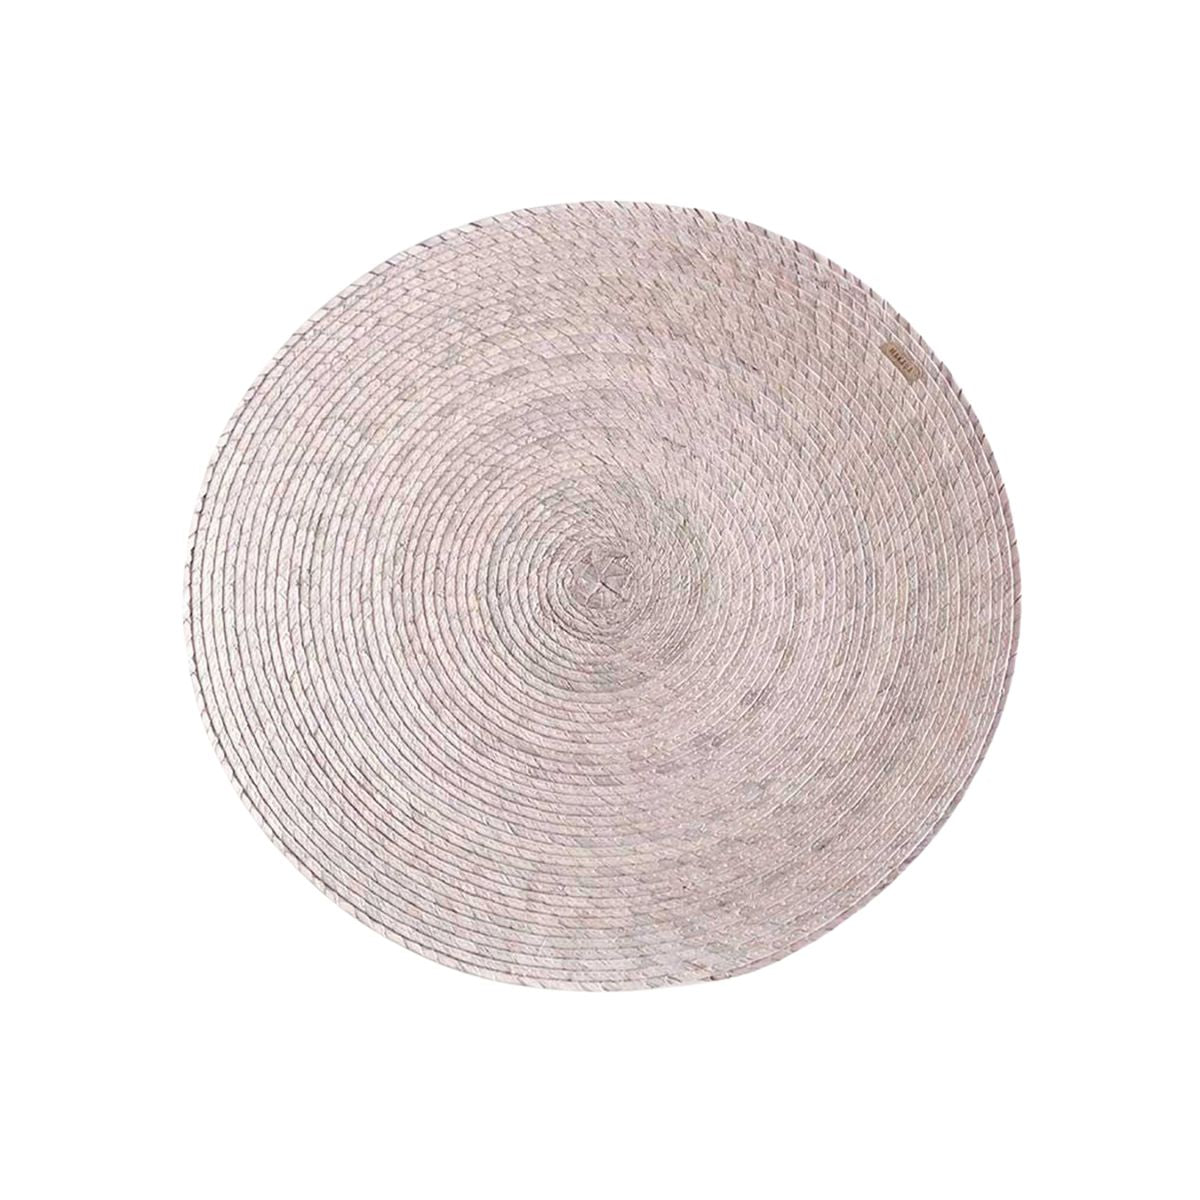 Handmade Palm Round Placemat